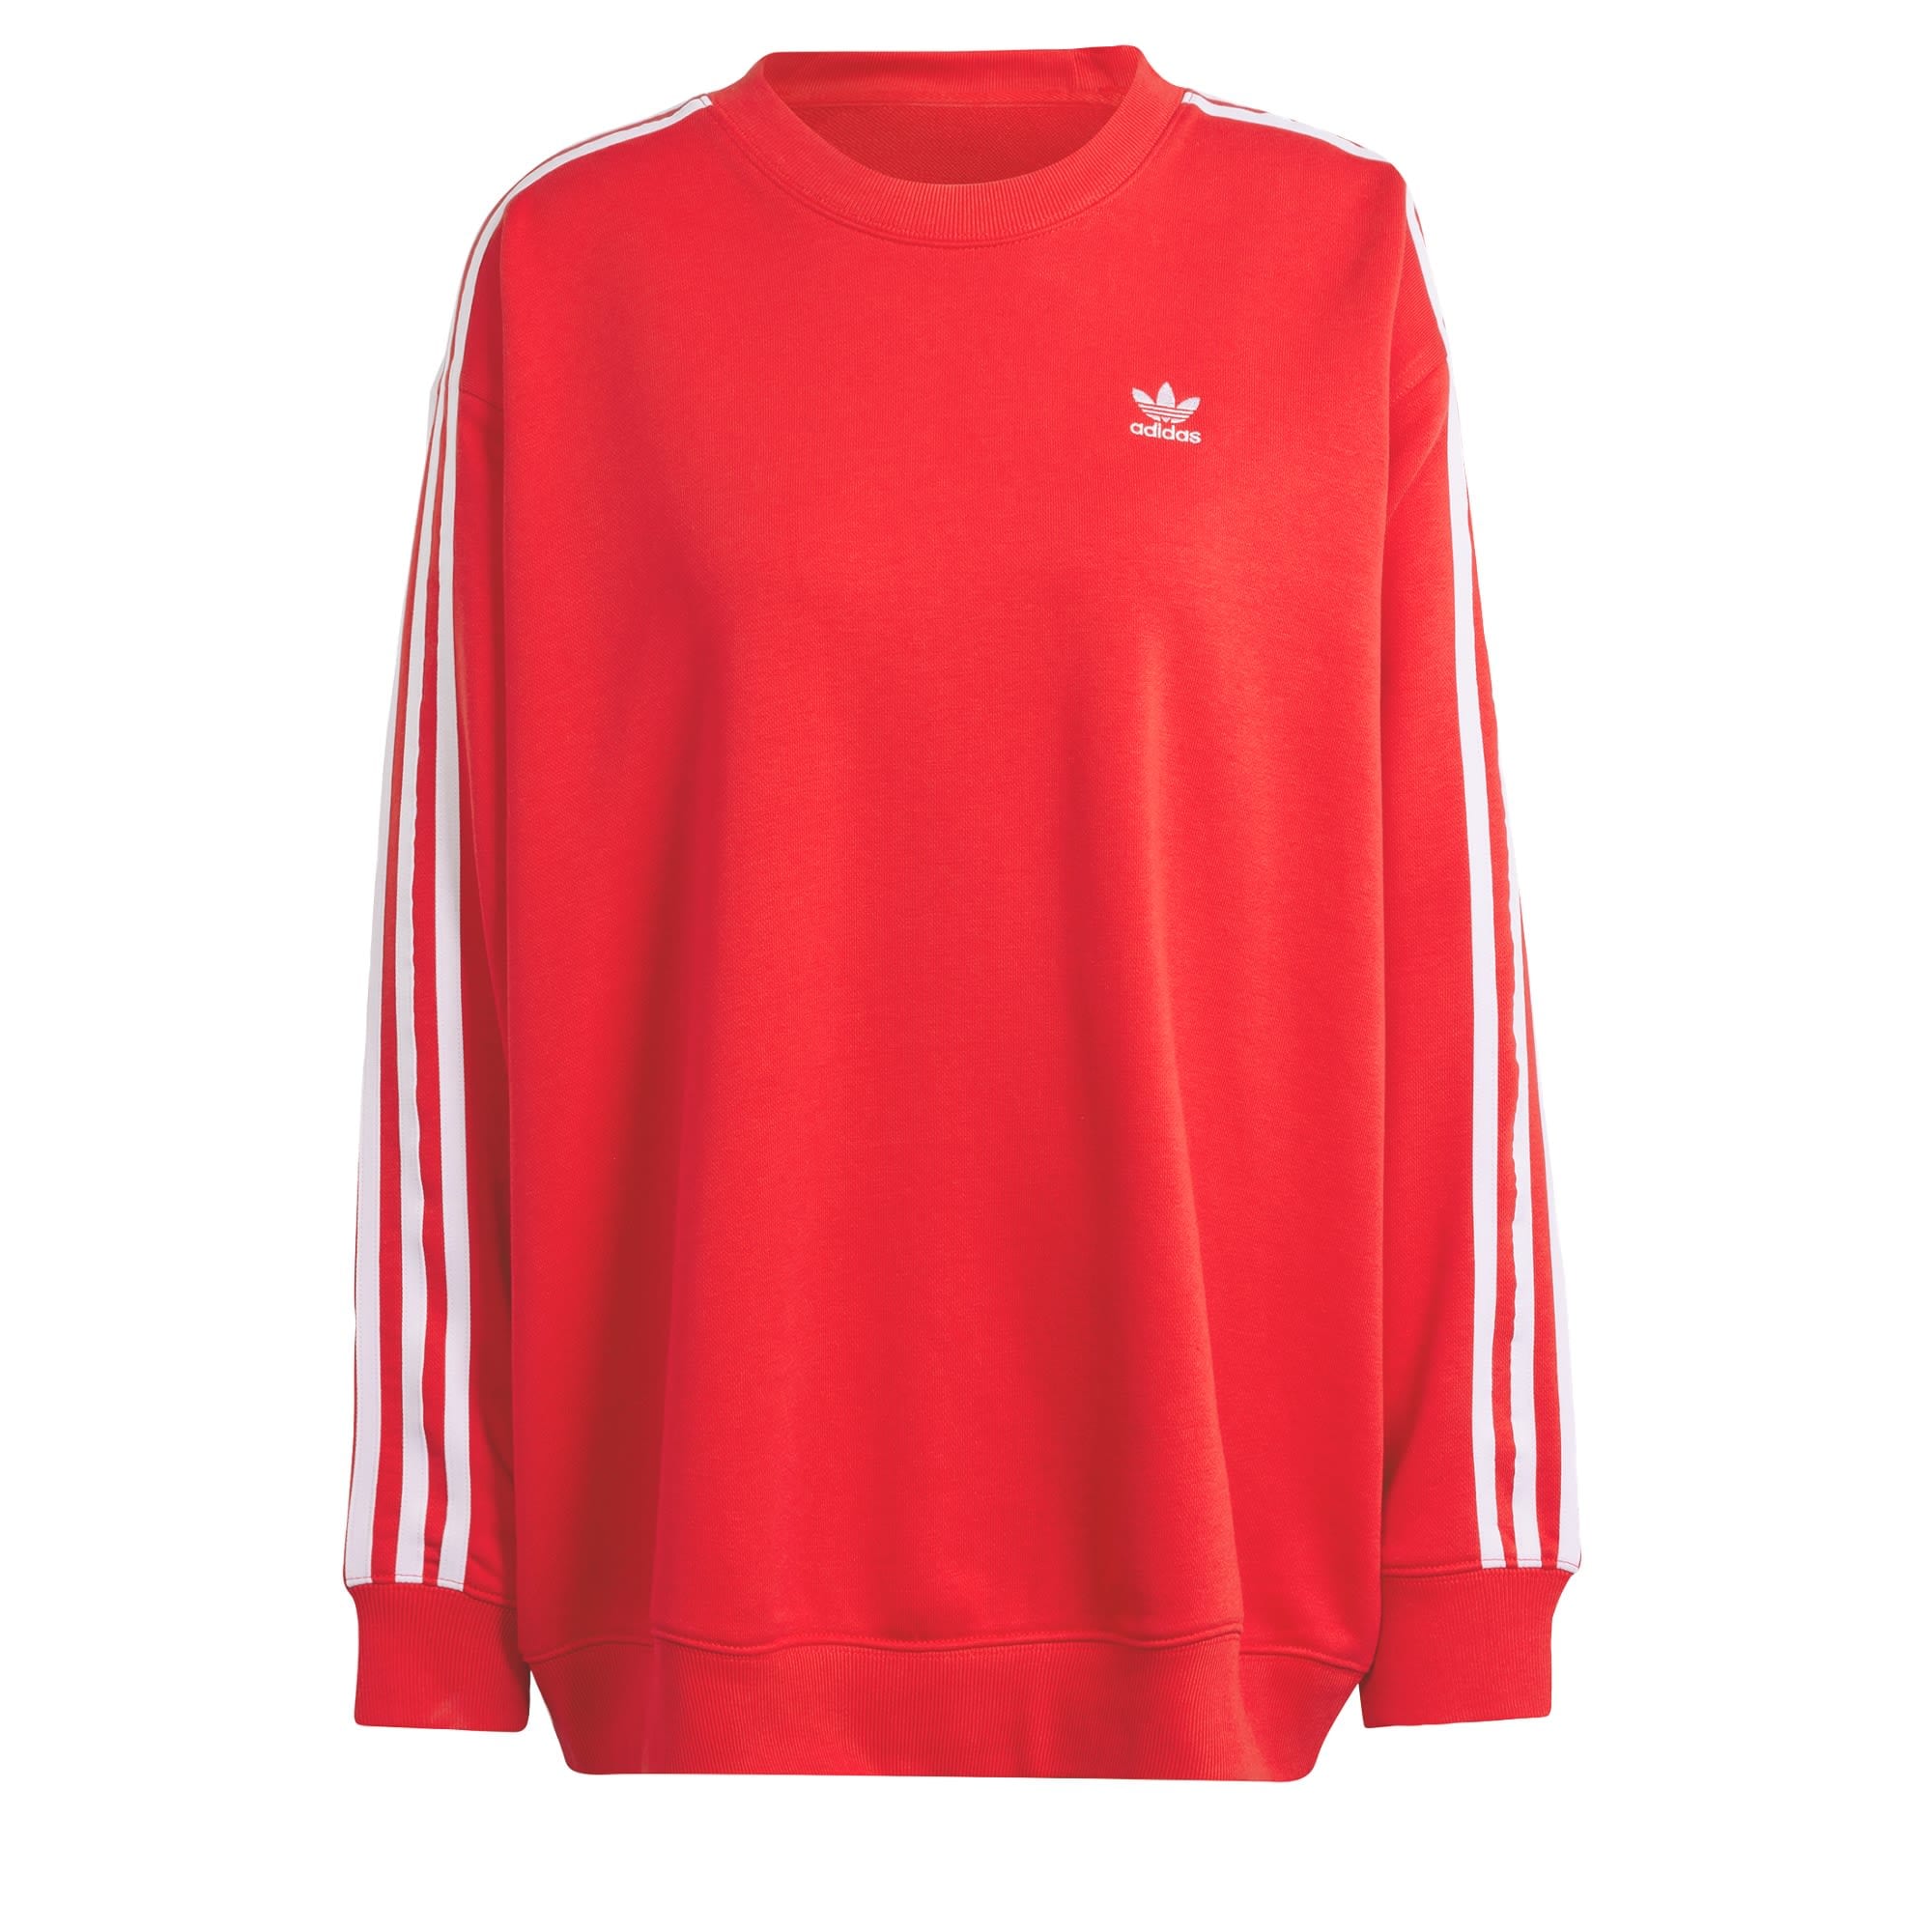 ADIDAS ORIGINALS Sweater majica  crvena / bijela